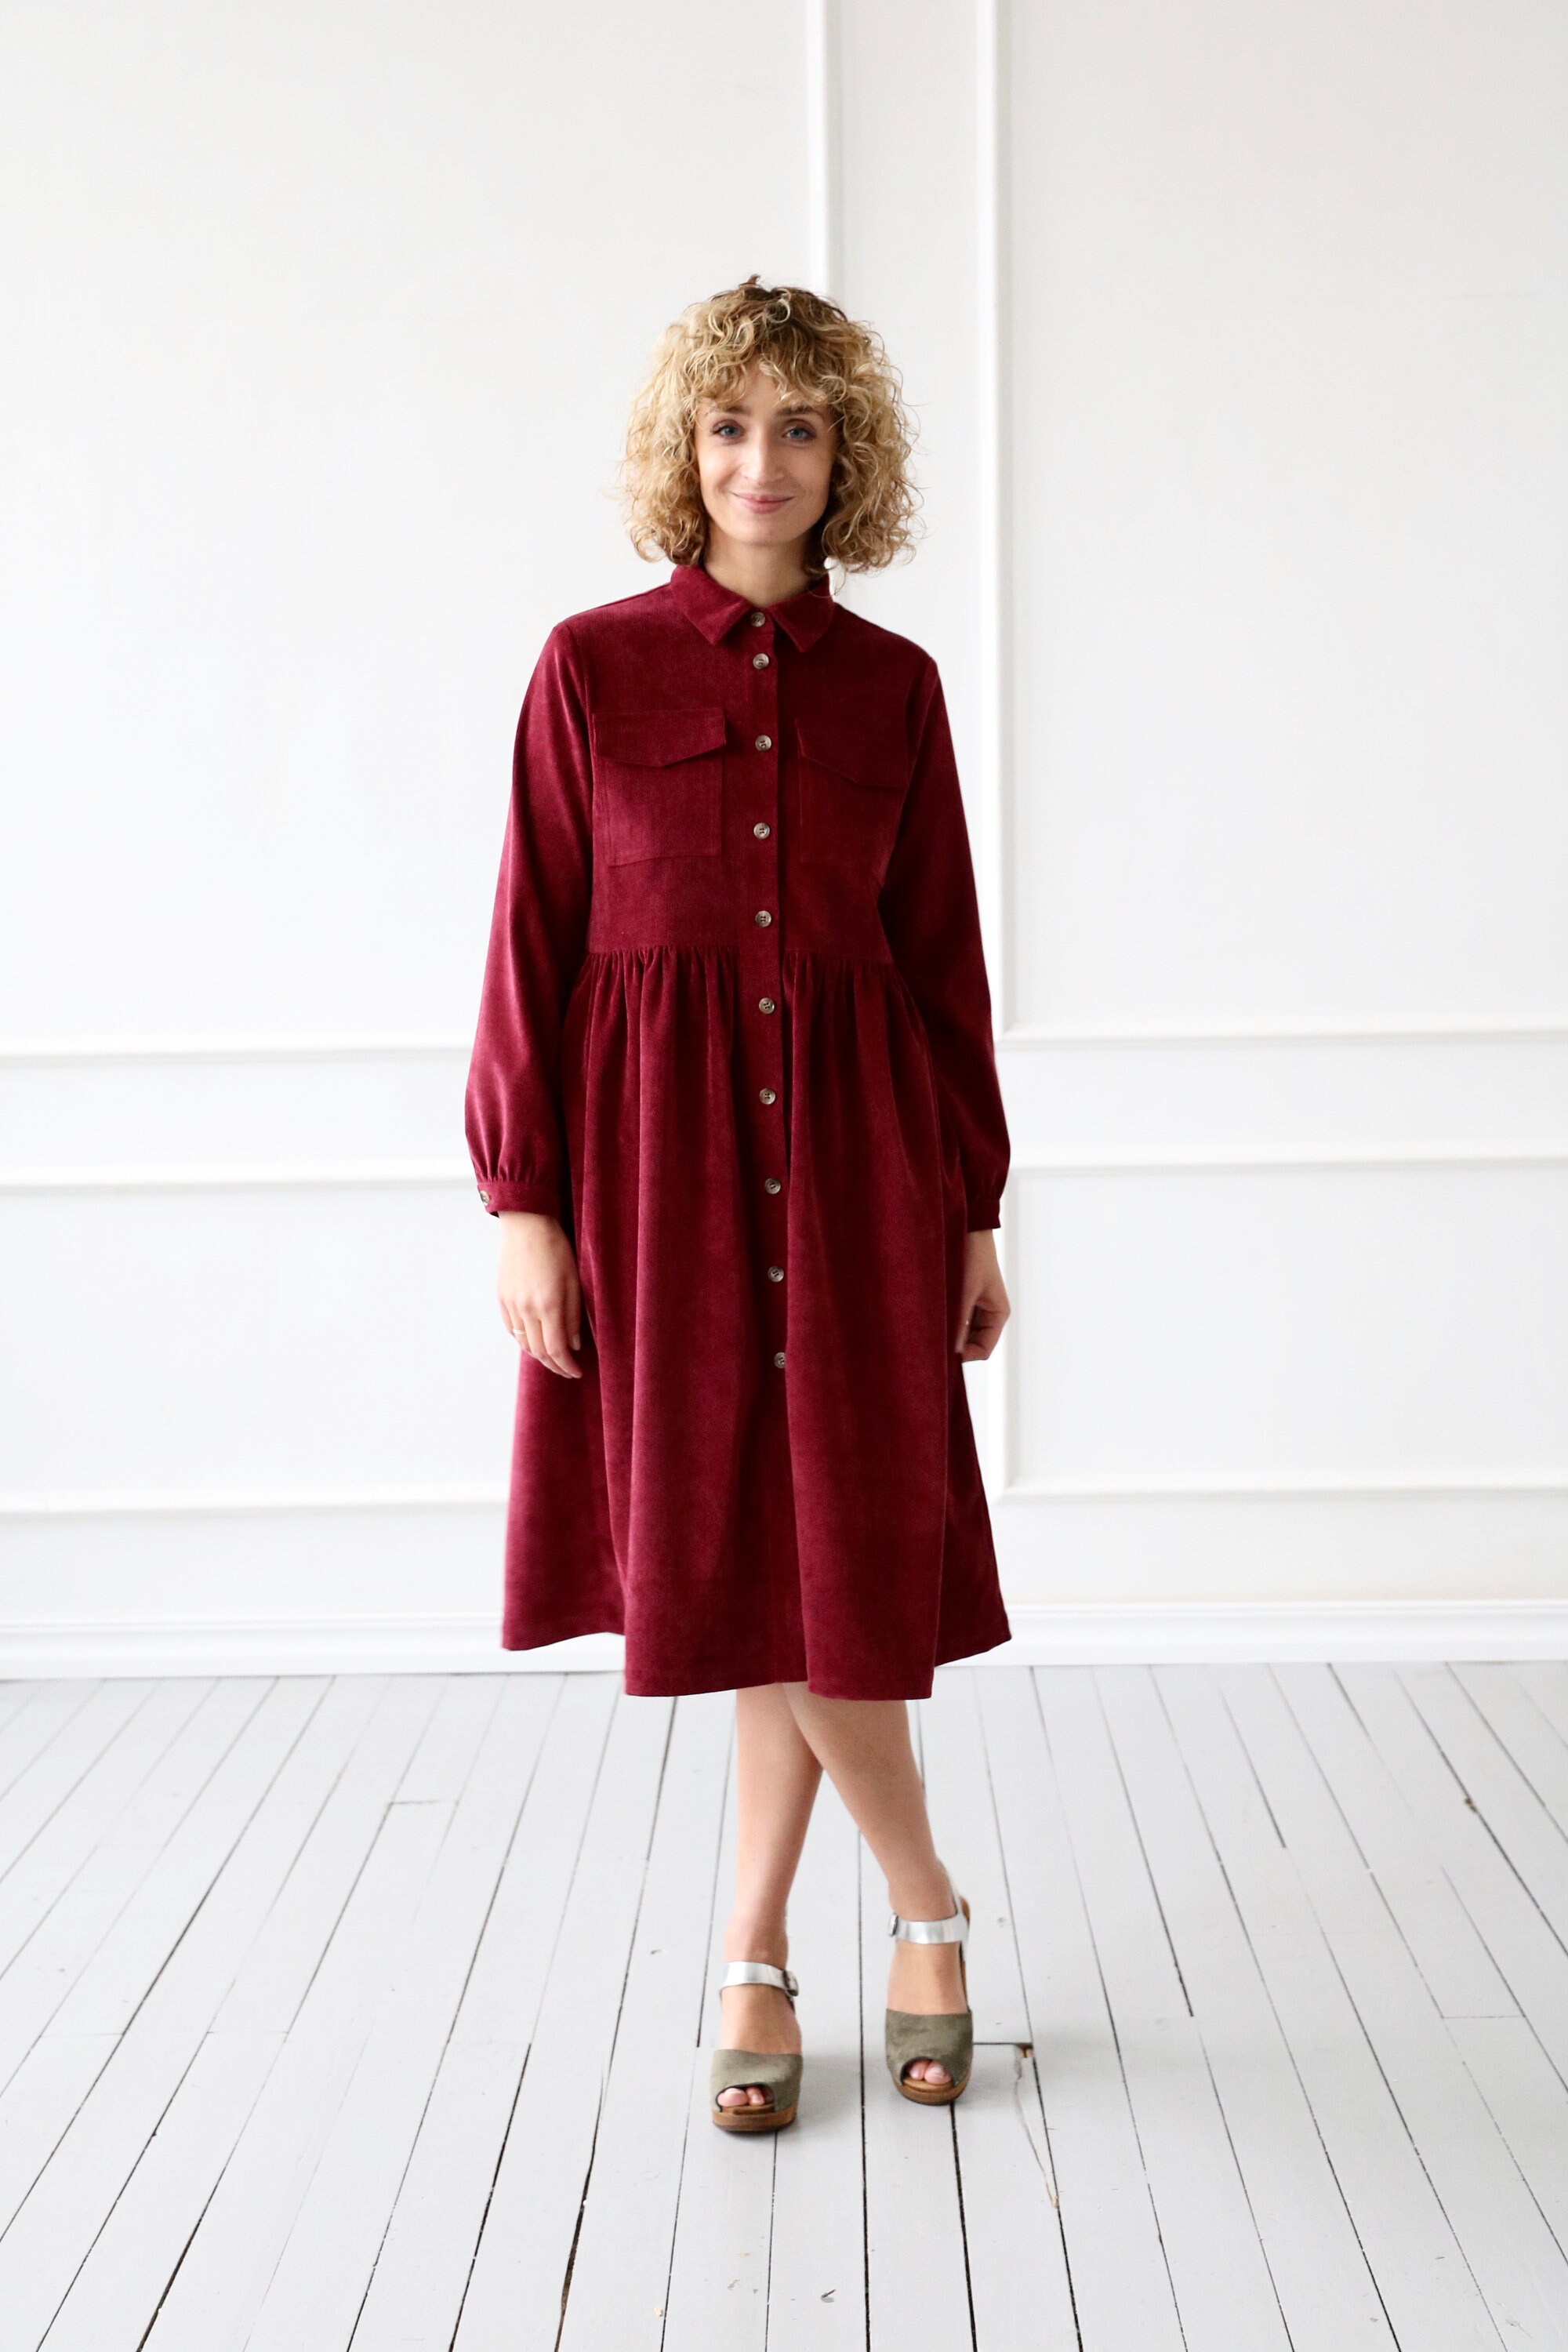 Corduroy Dress/cotton Dress/needlecord Shirt Dress in Red - Etsy UK